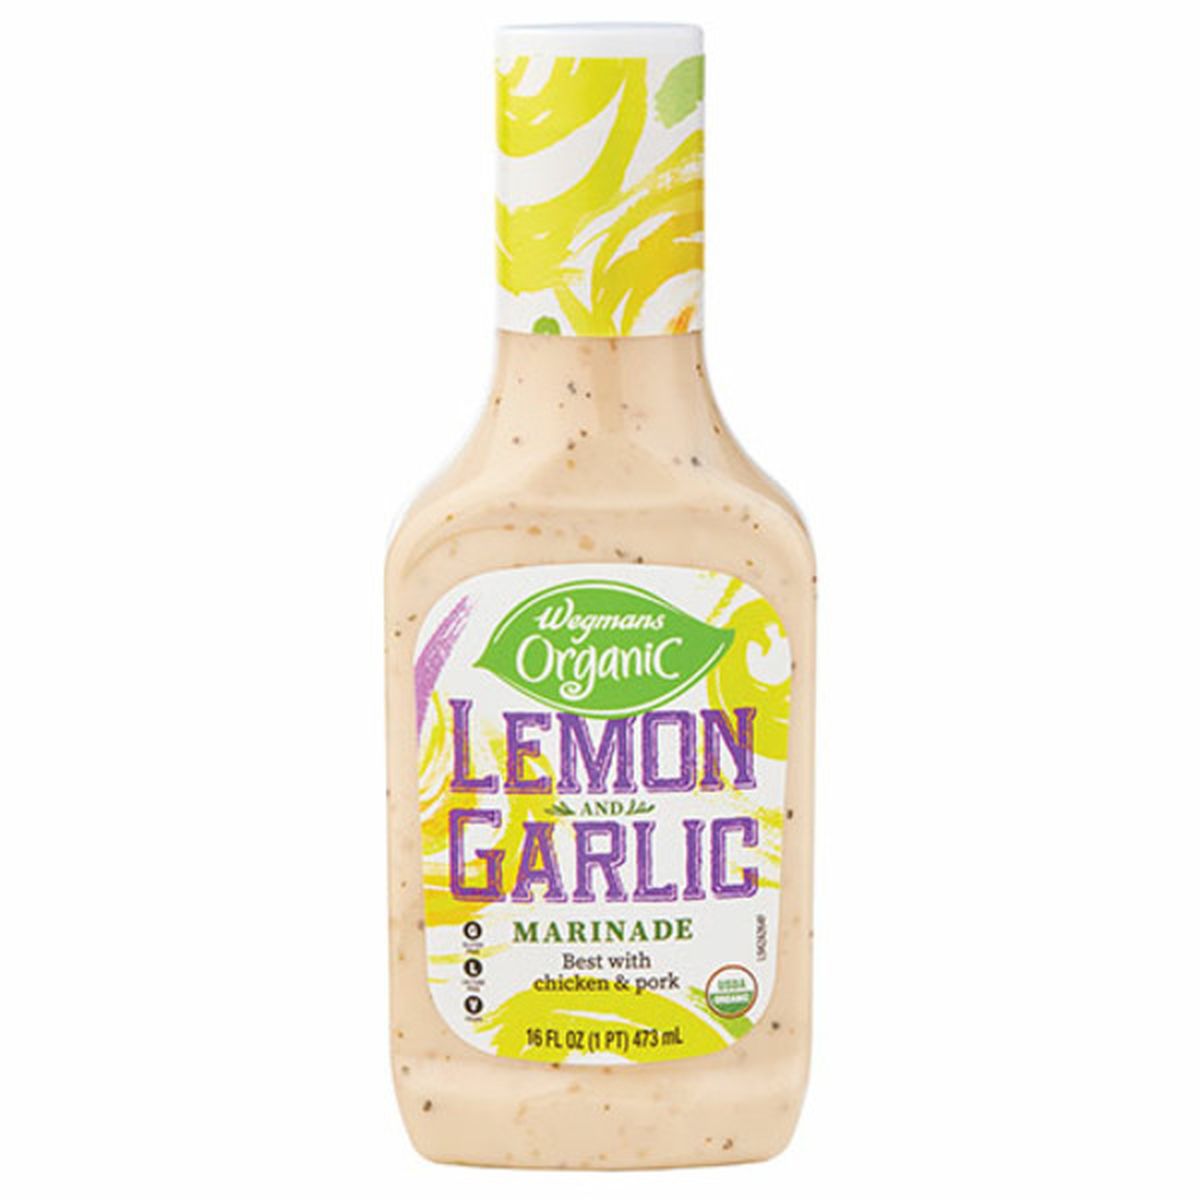 Calories in Wegmans Organic Lemon & Garlic Marinade